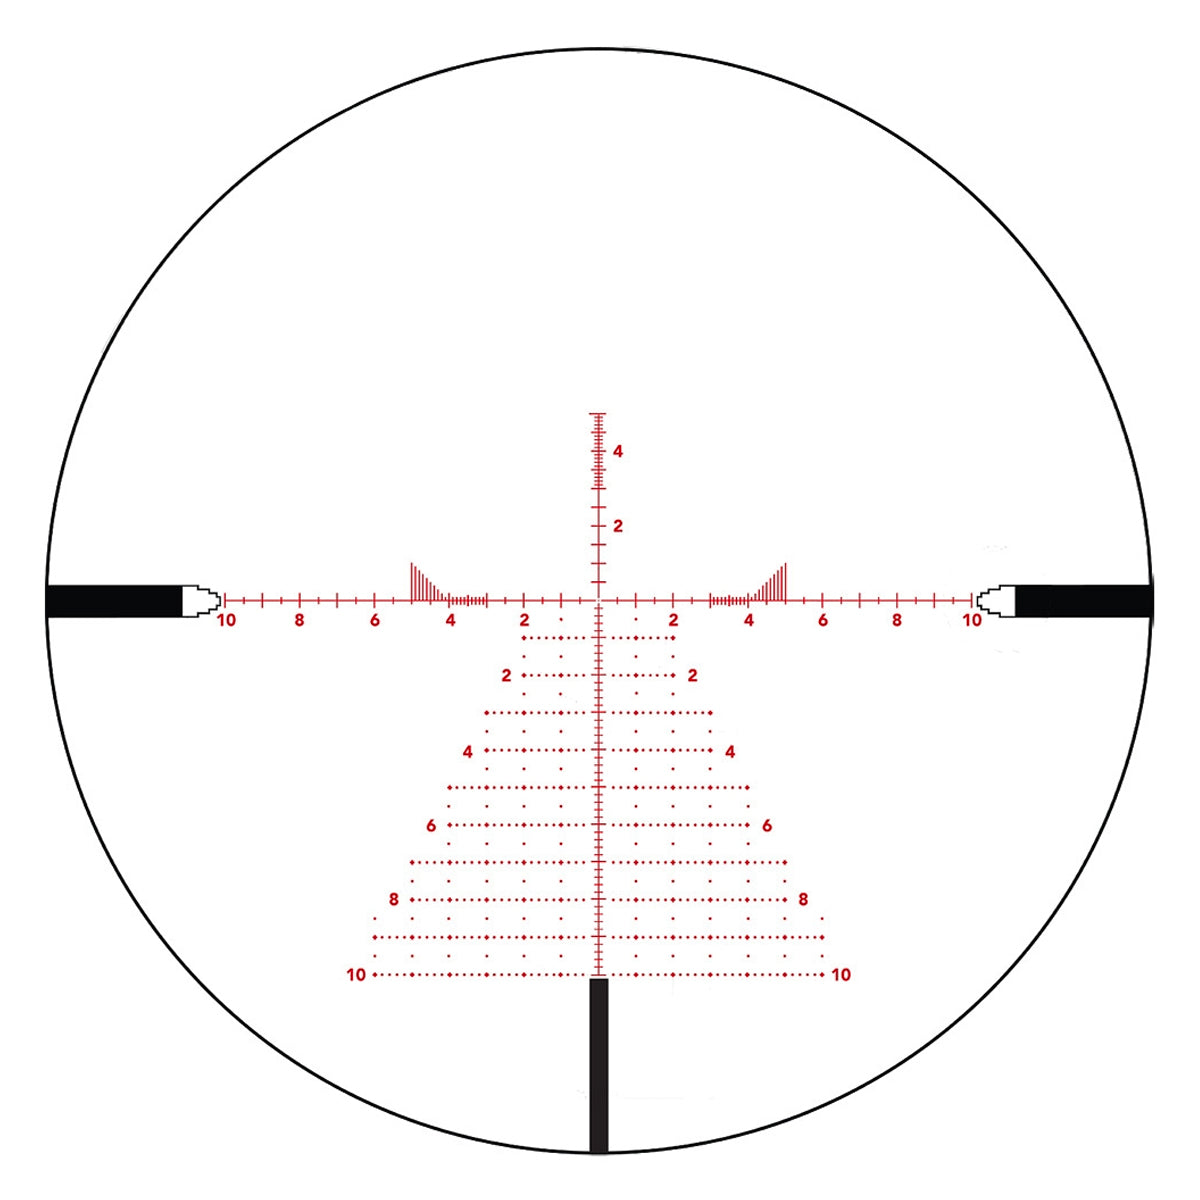 Sig Sauer Tango4 6-24x50 30mm FFP MOA DEV-L Levelplex Side-Focus Riflescope in  by GOHUNT | Sig Sauer - GOHUNT Shop